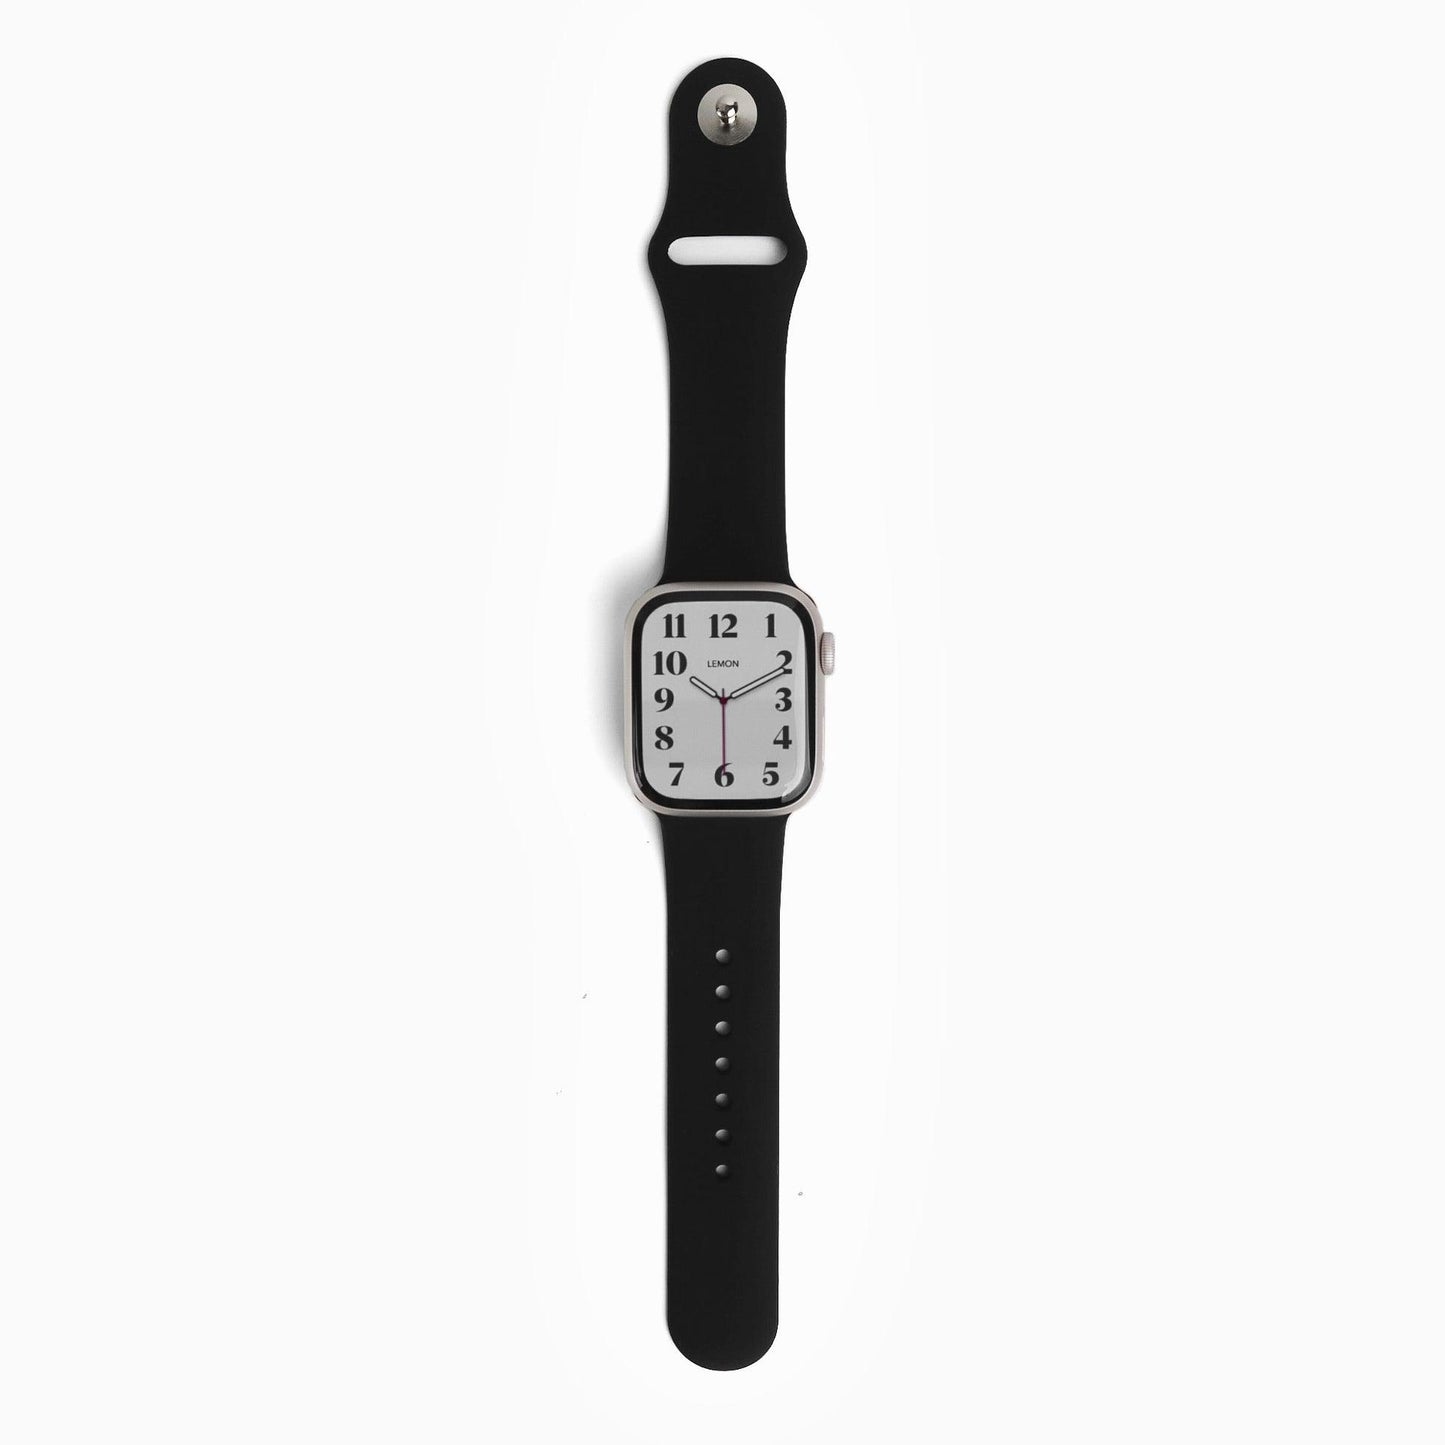 Essential Apple Watch Band - Black